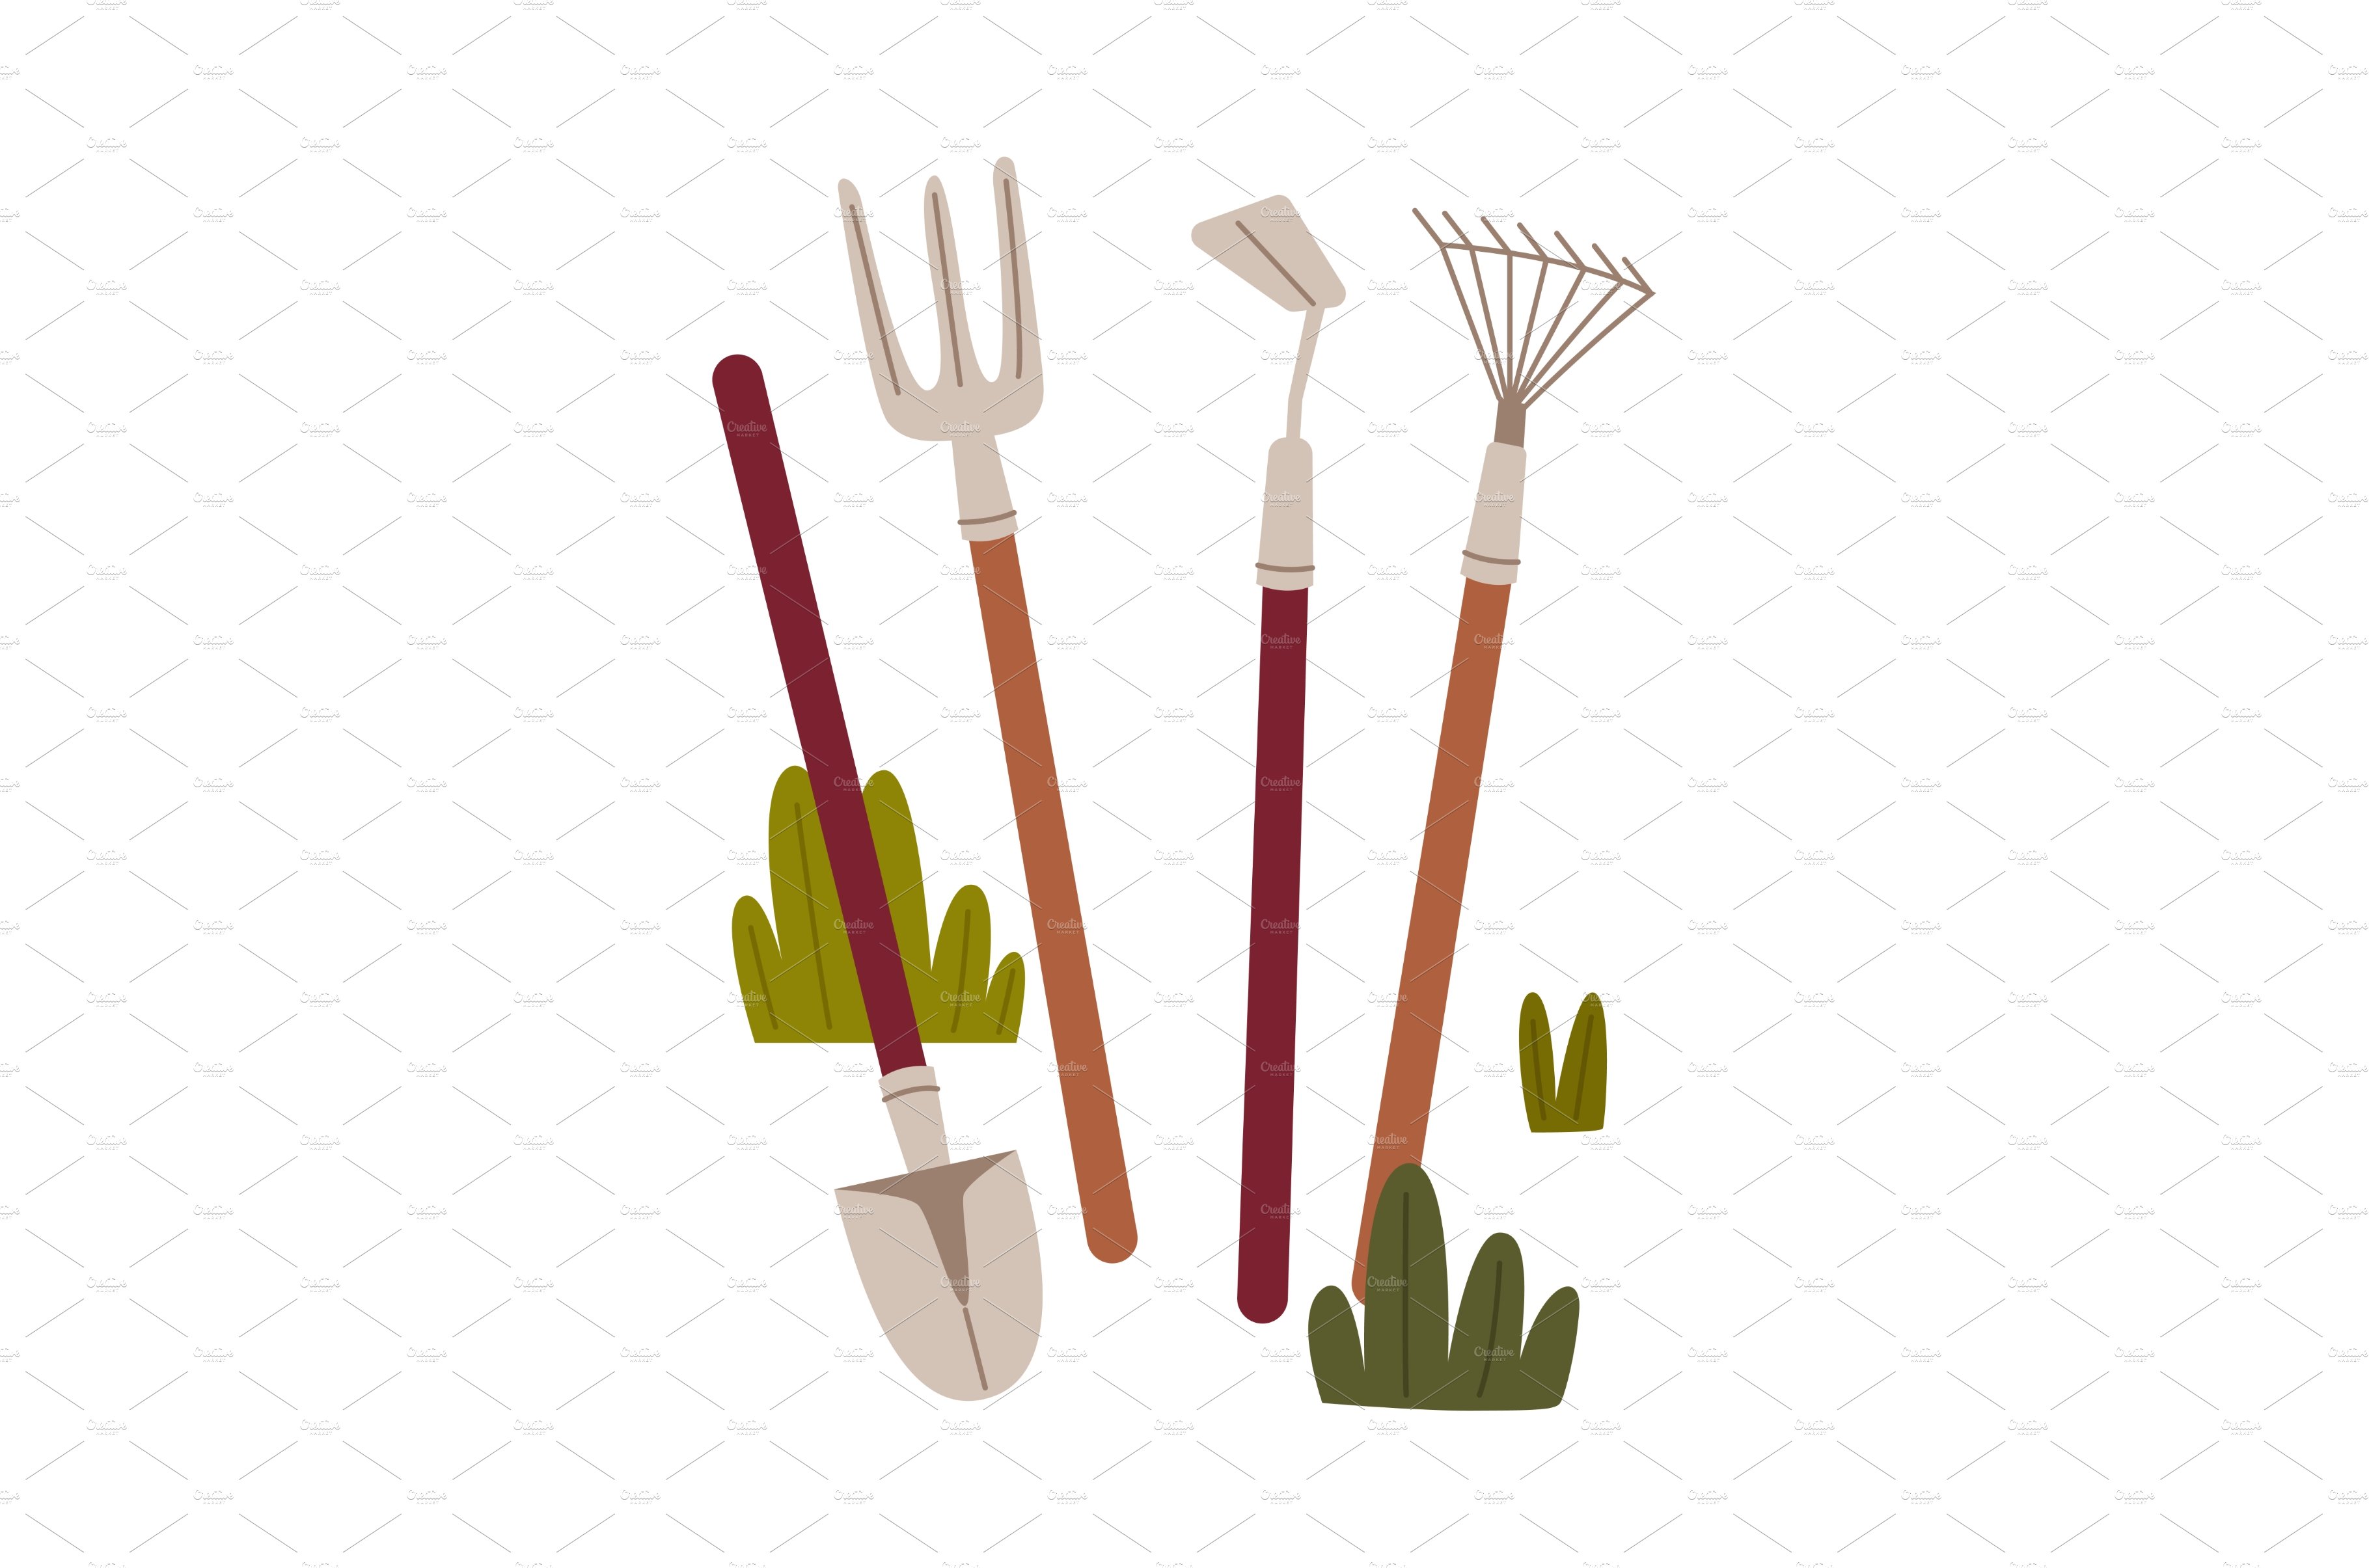 Shovel, Pitchfork and Hoe as Garden cover image.